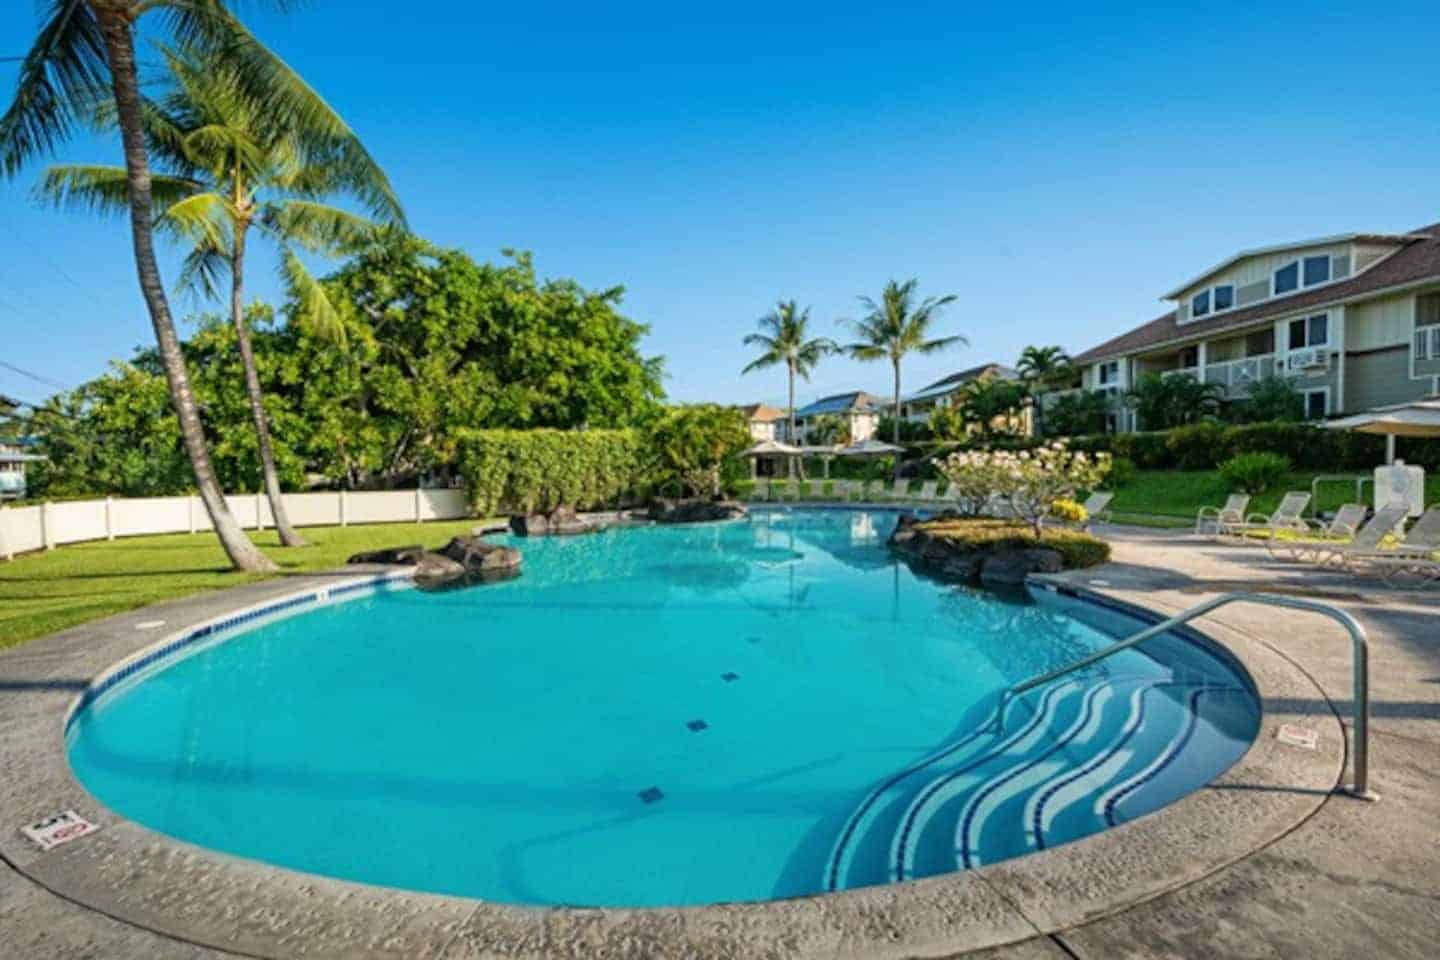 Image of Airbnb rental in Hilo, Hawaii